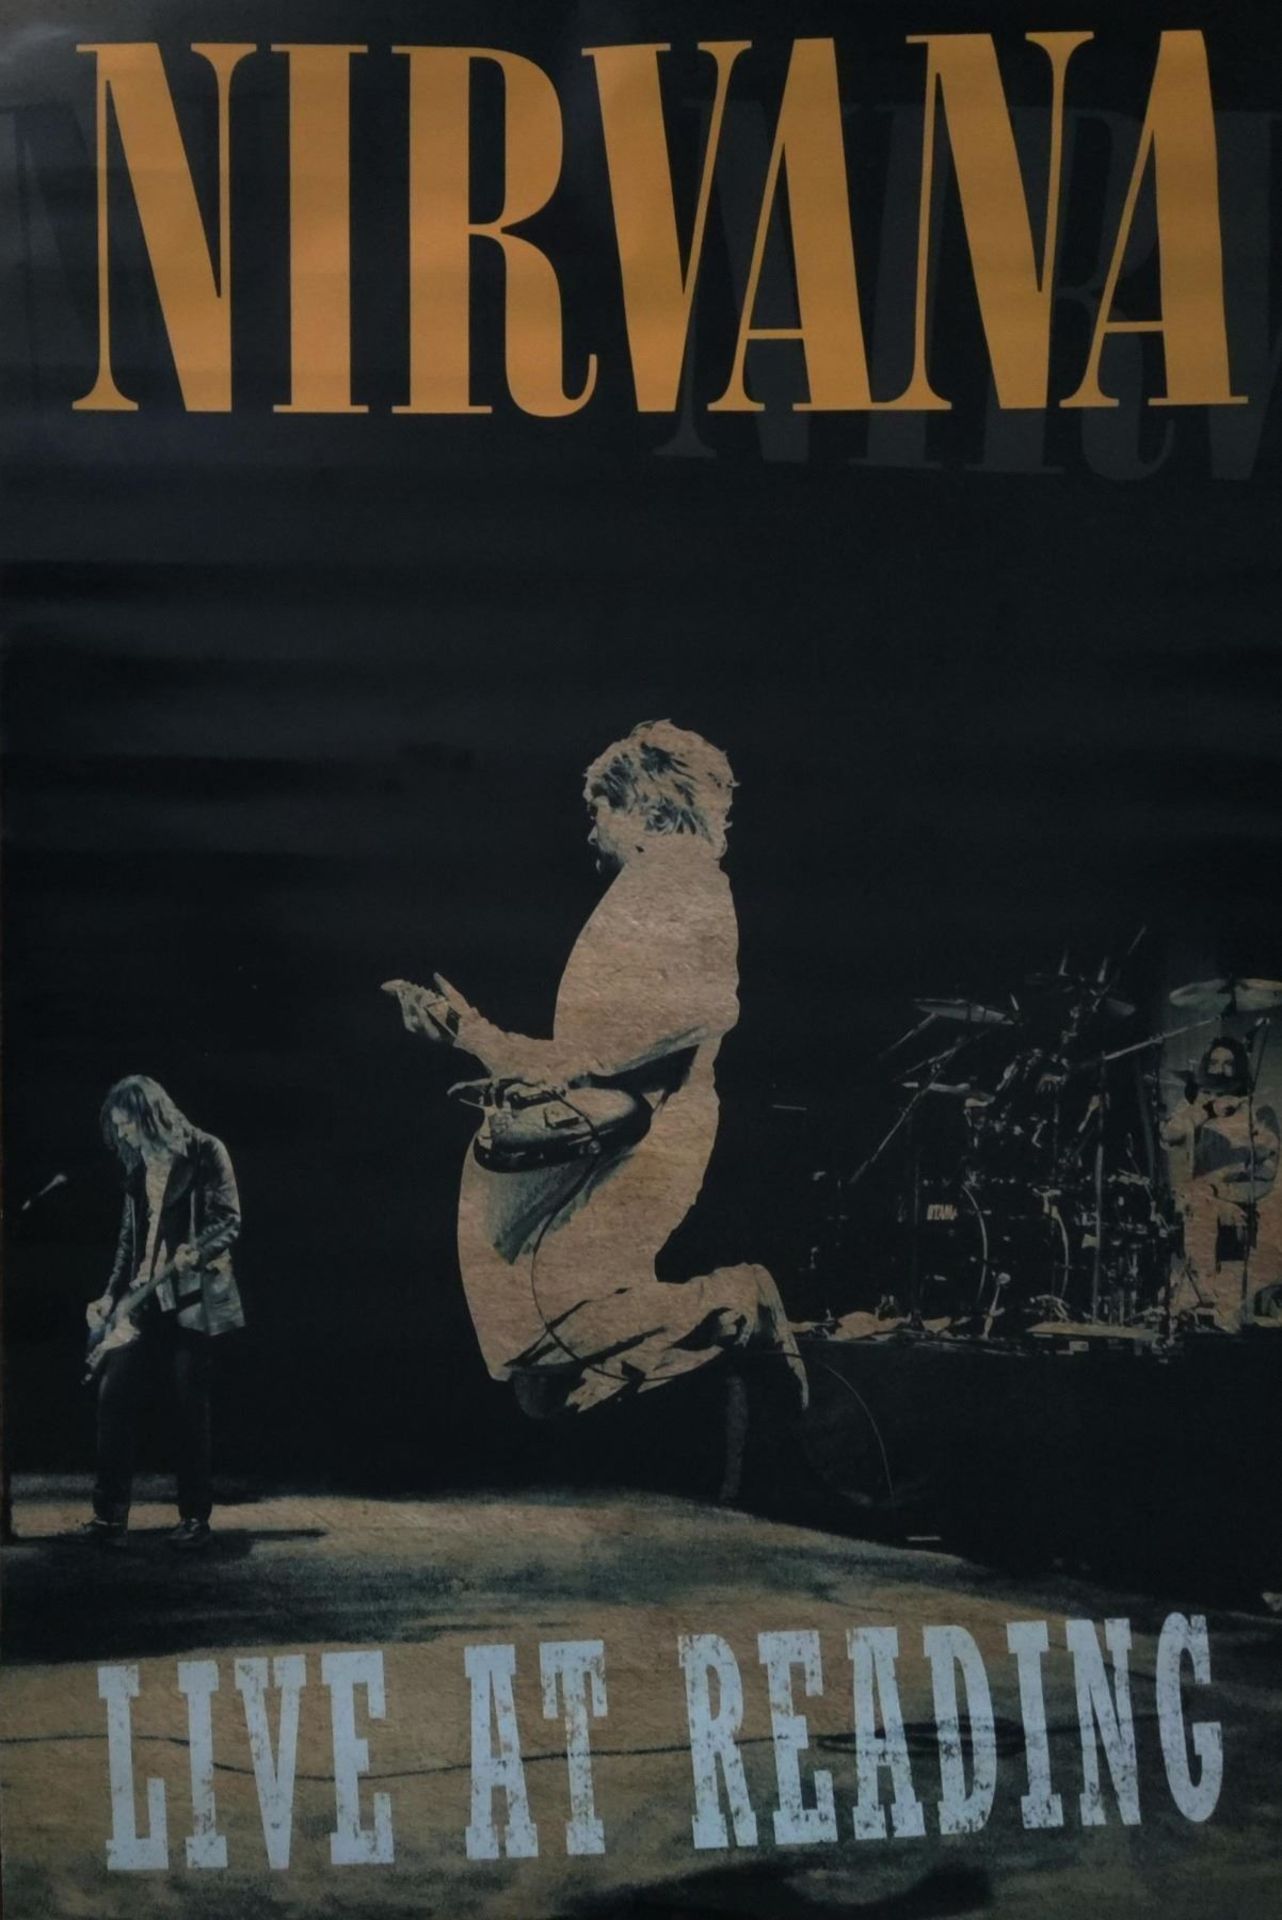 Nirvana - Live at Reading, Muse, Metallica (sealed), Michael Jackson - Number Ones, Take That,